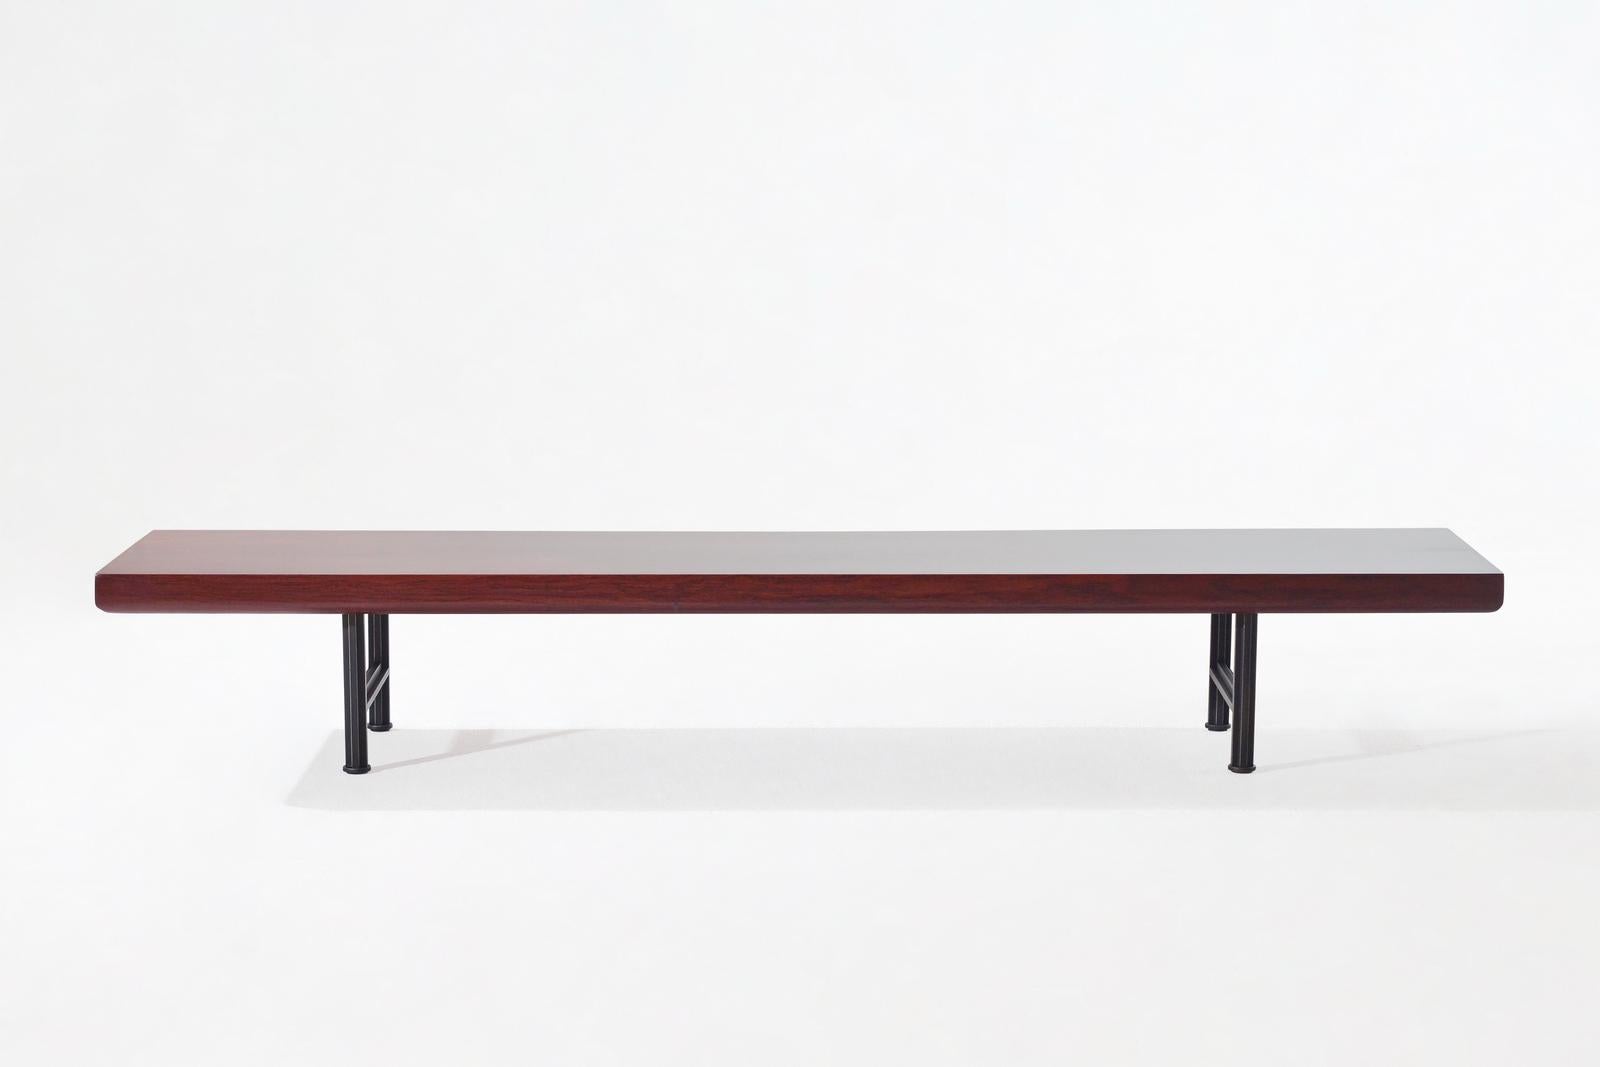 Minimalist Bespoke Low Table Reclaimed Hardwood on Solid Brass Base, by P. Tendercool For Sale